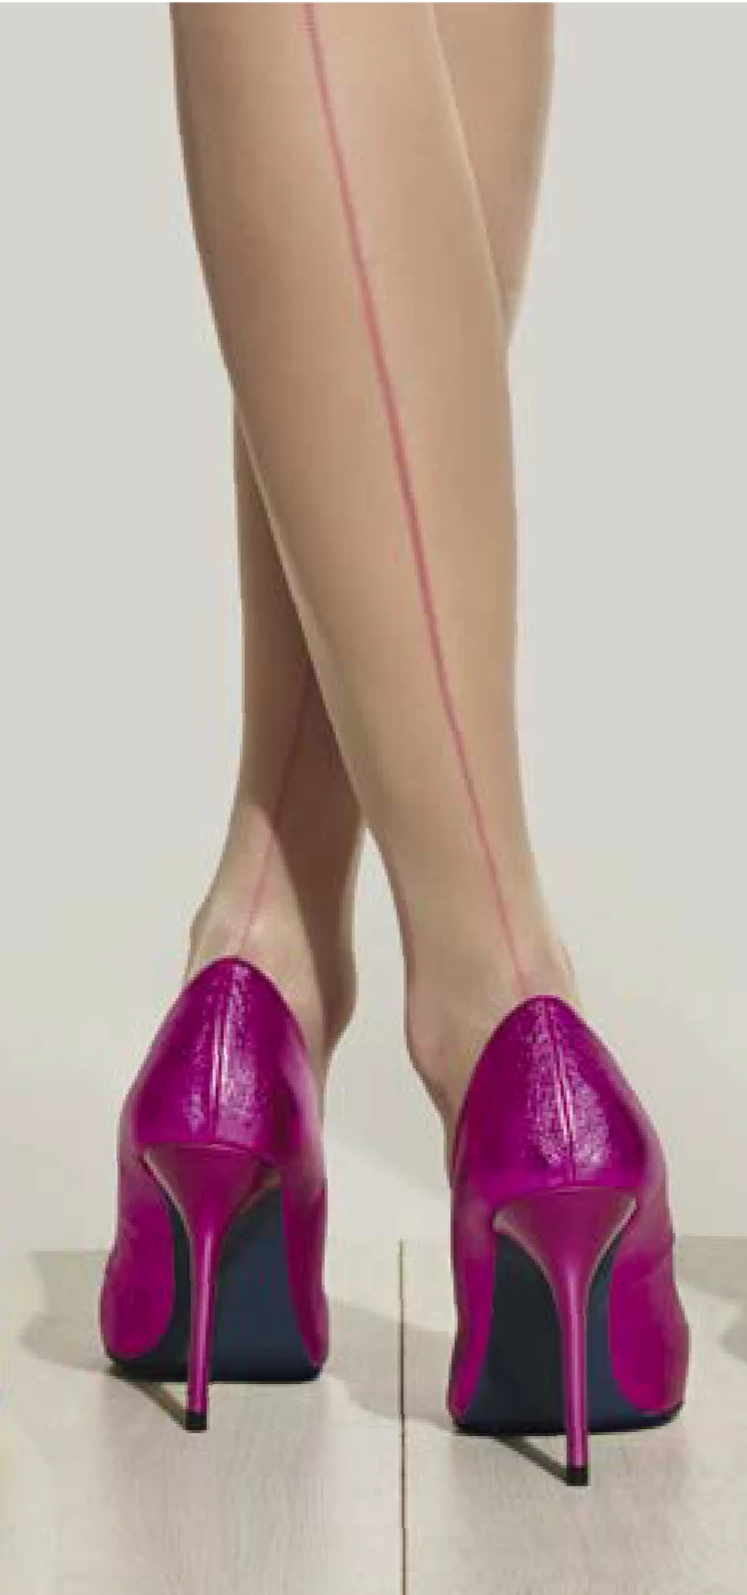 Trasparenze Mirtillo Collant - sheer nude fashion tights with pink back seam stripe